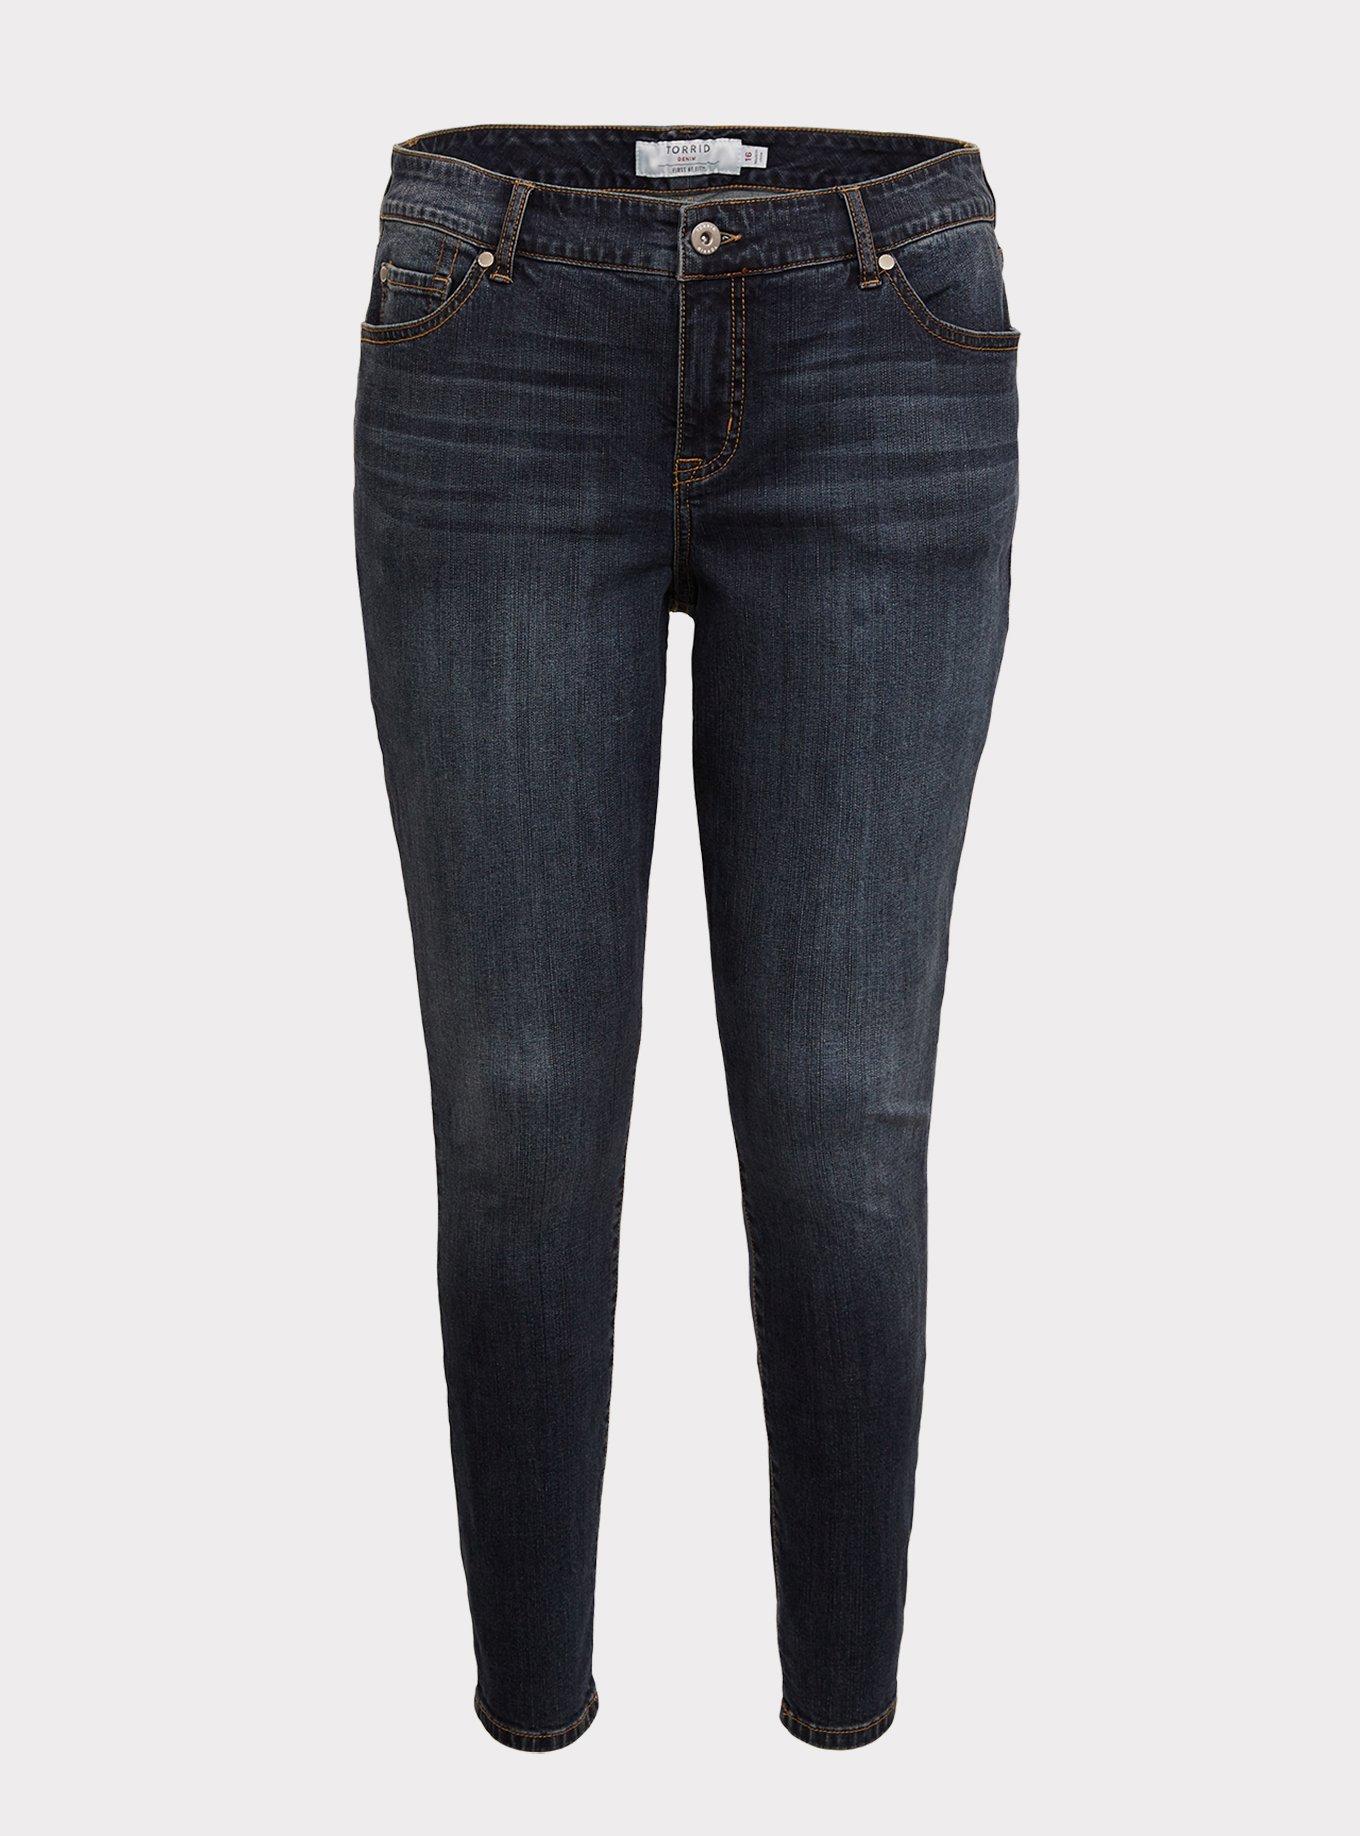 Plus Size - Mid Rise Skinny Jean - Vintage Stretch Dark Wash - Torrid